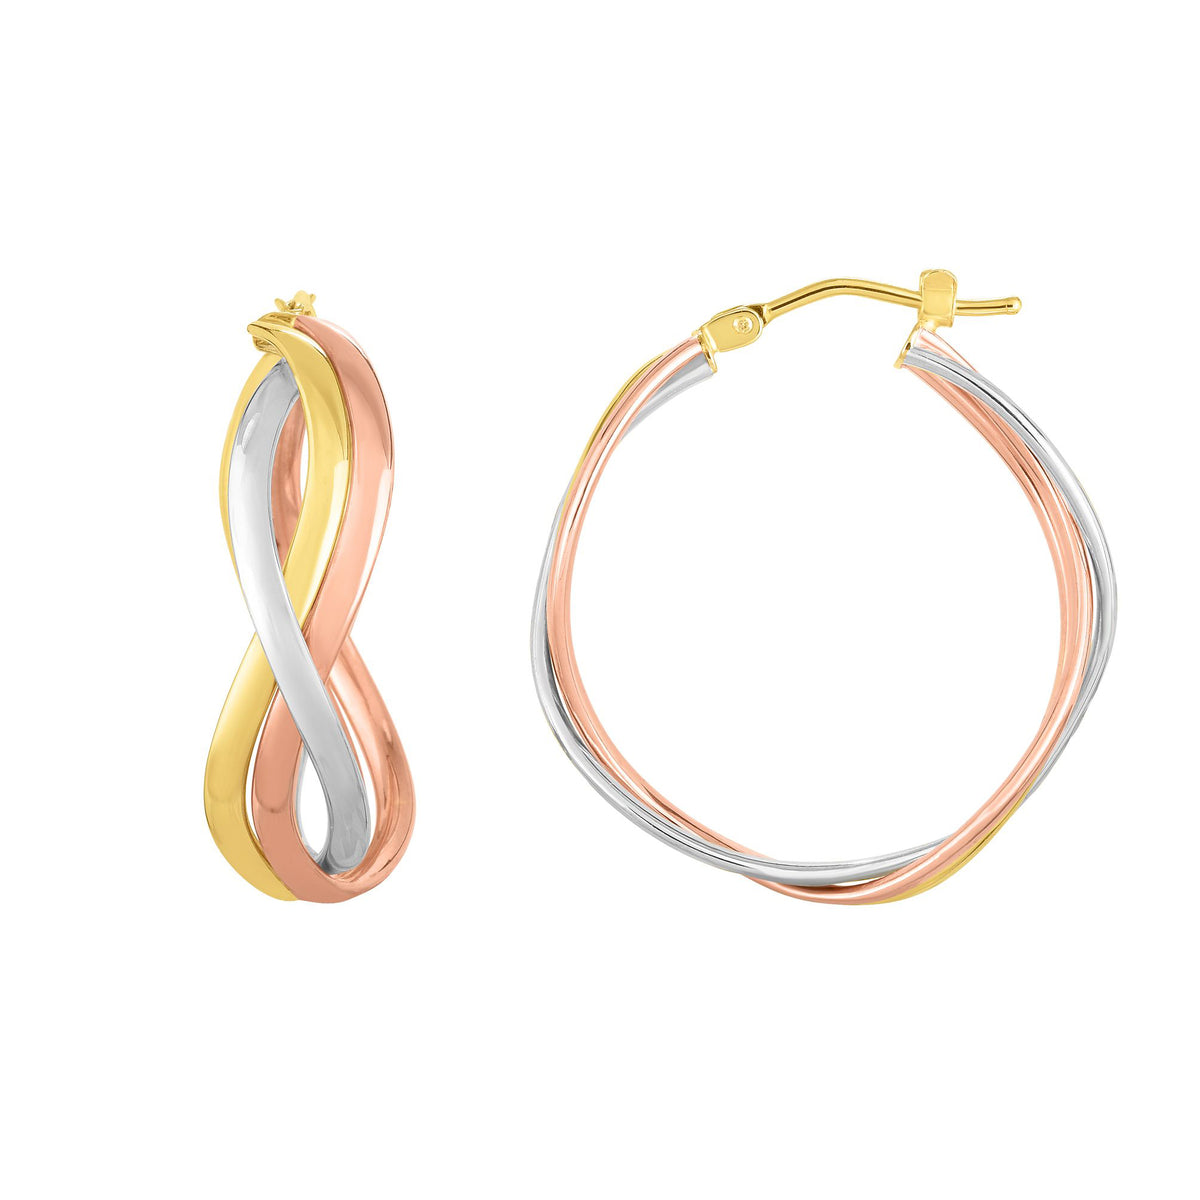 14K Gold Rose Yellow And White Diamond Cut Hoop Fancy Earrings, Diameter 23mm fine designer jewelry for men and women